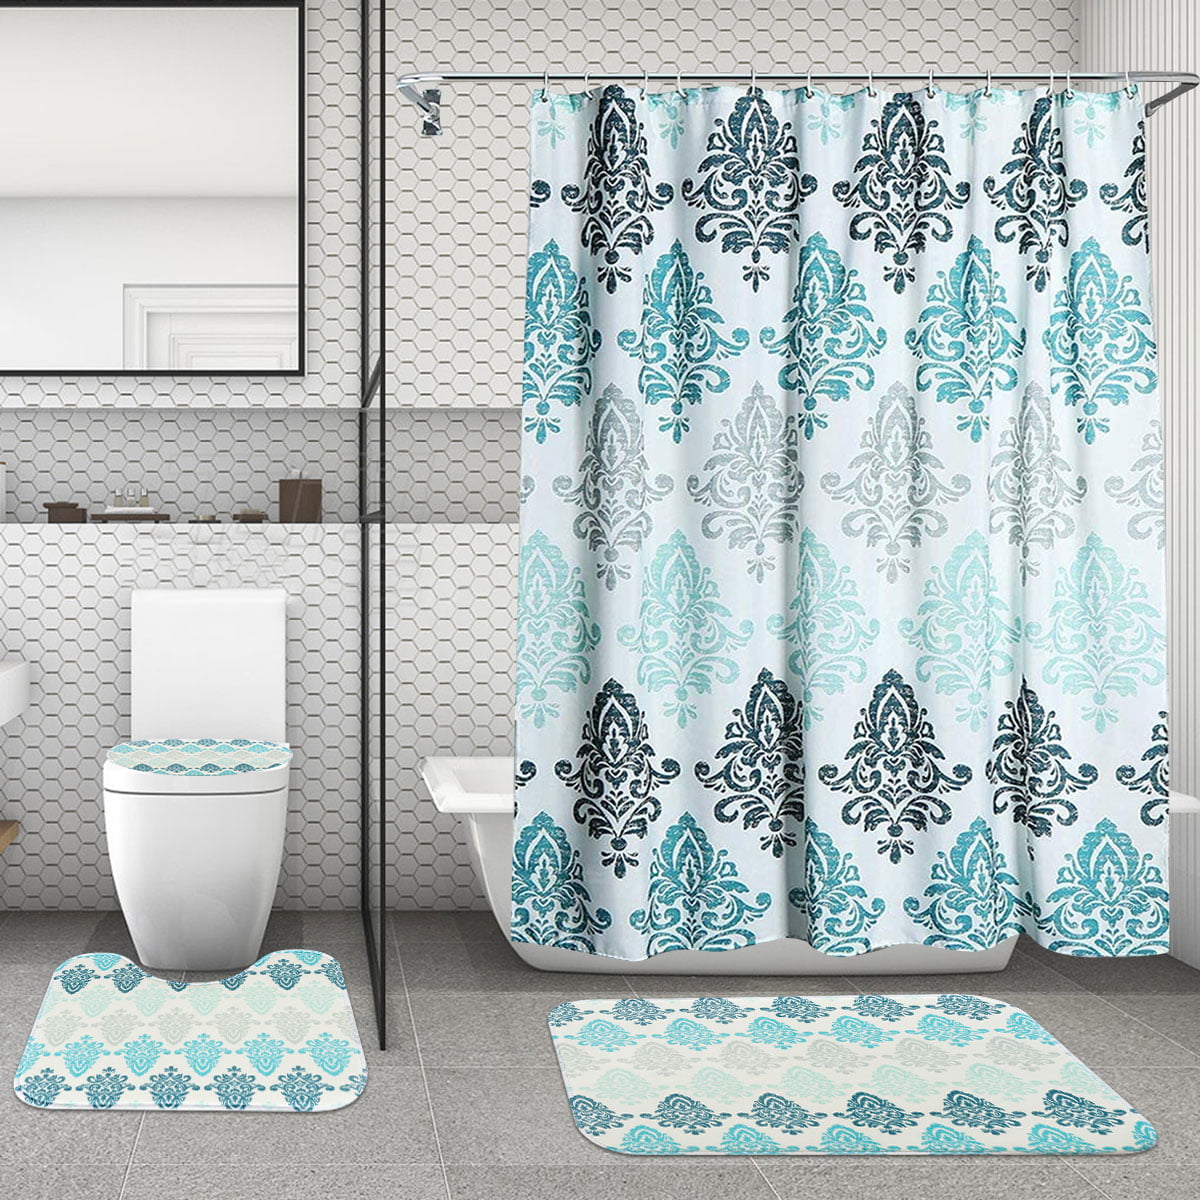 Art Horse Bathroom Shower Curtain Liner Waterproof Bathroom Fabric 12 Hook Mats 